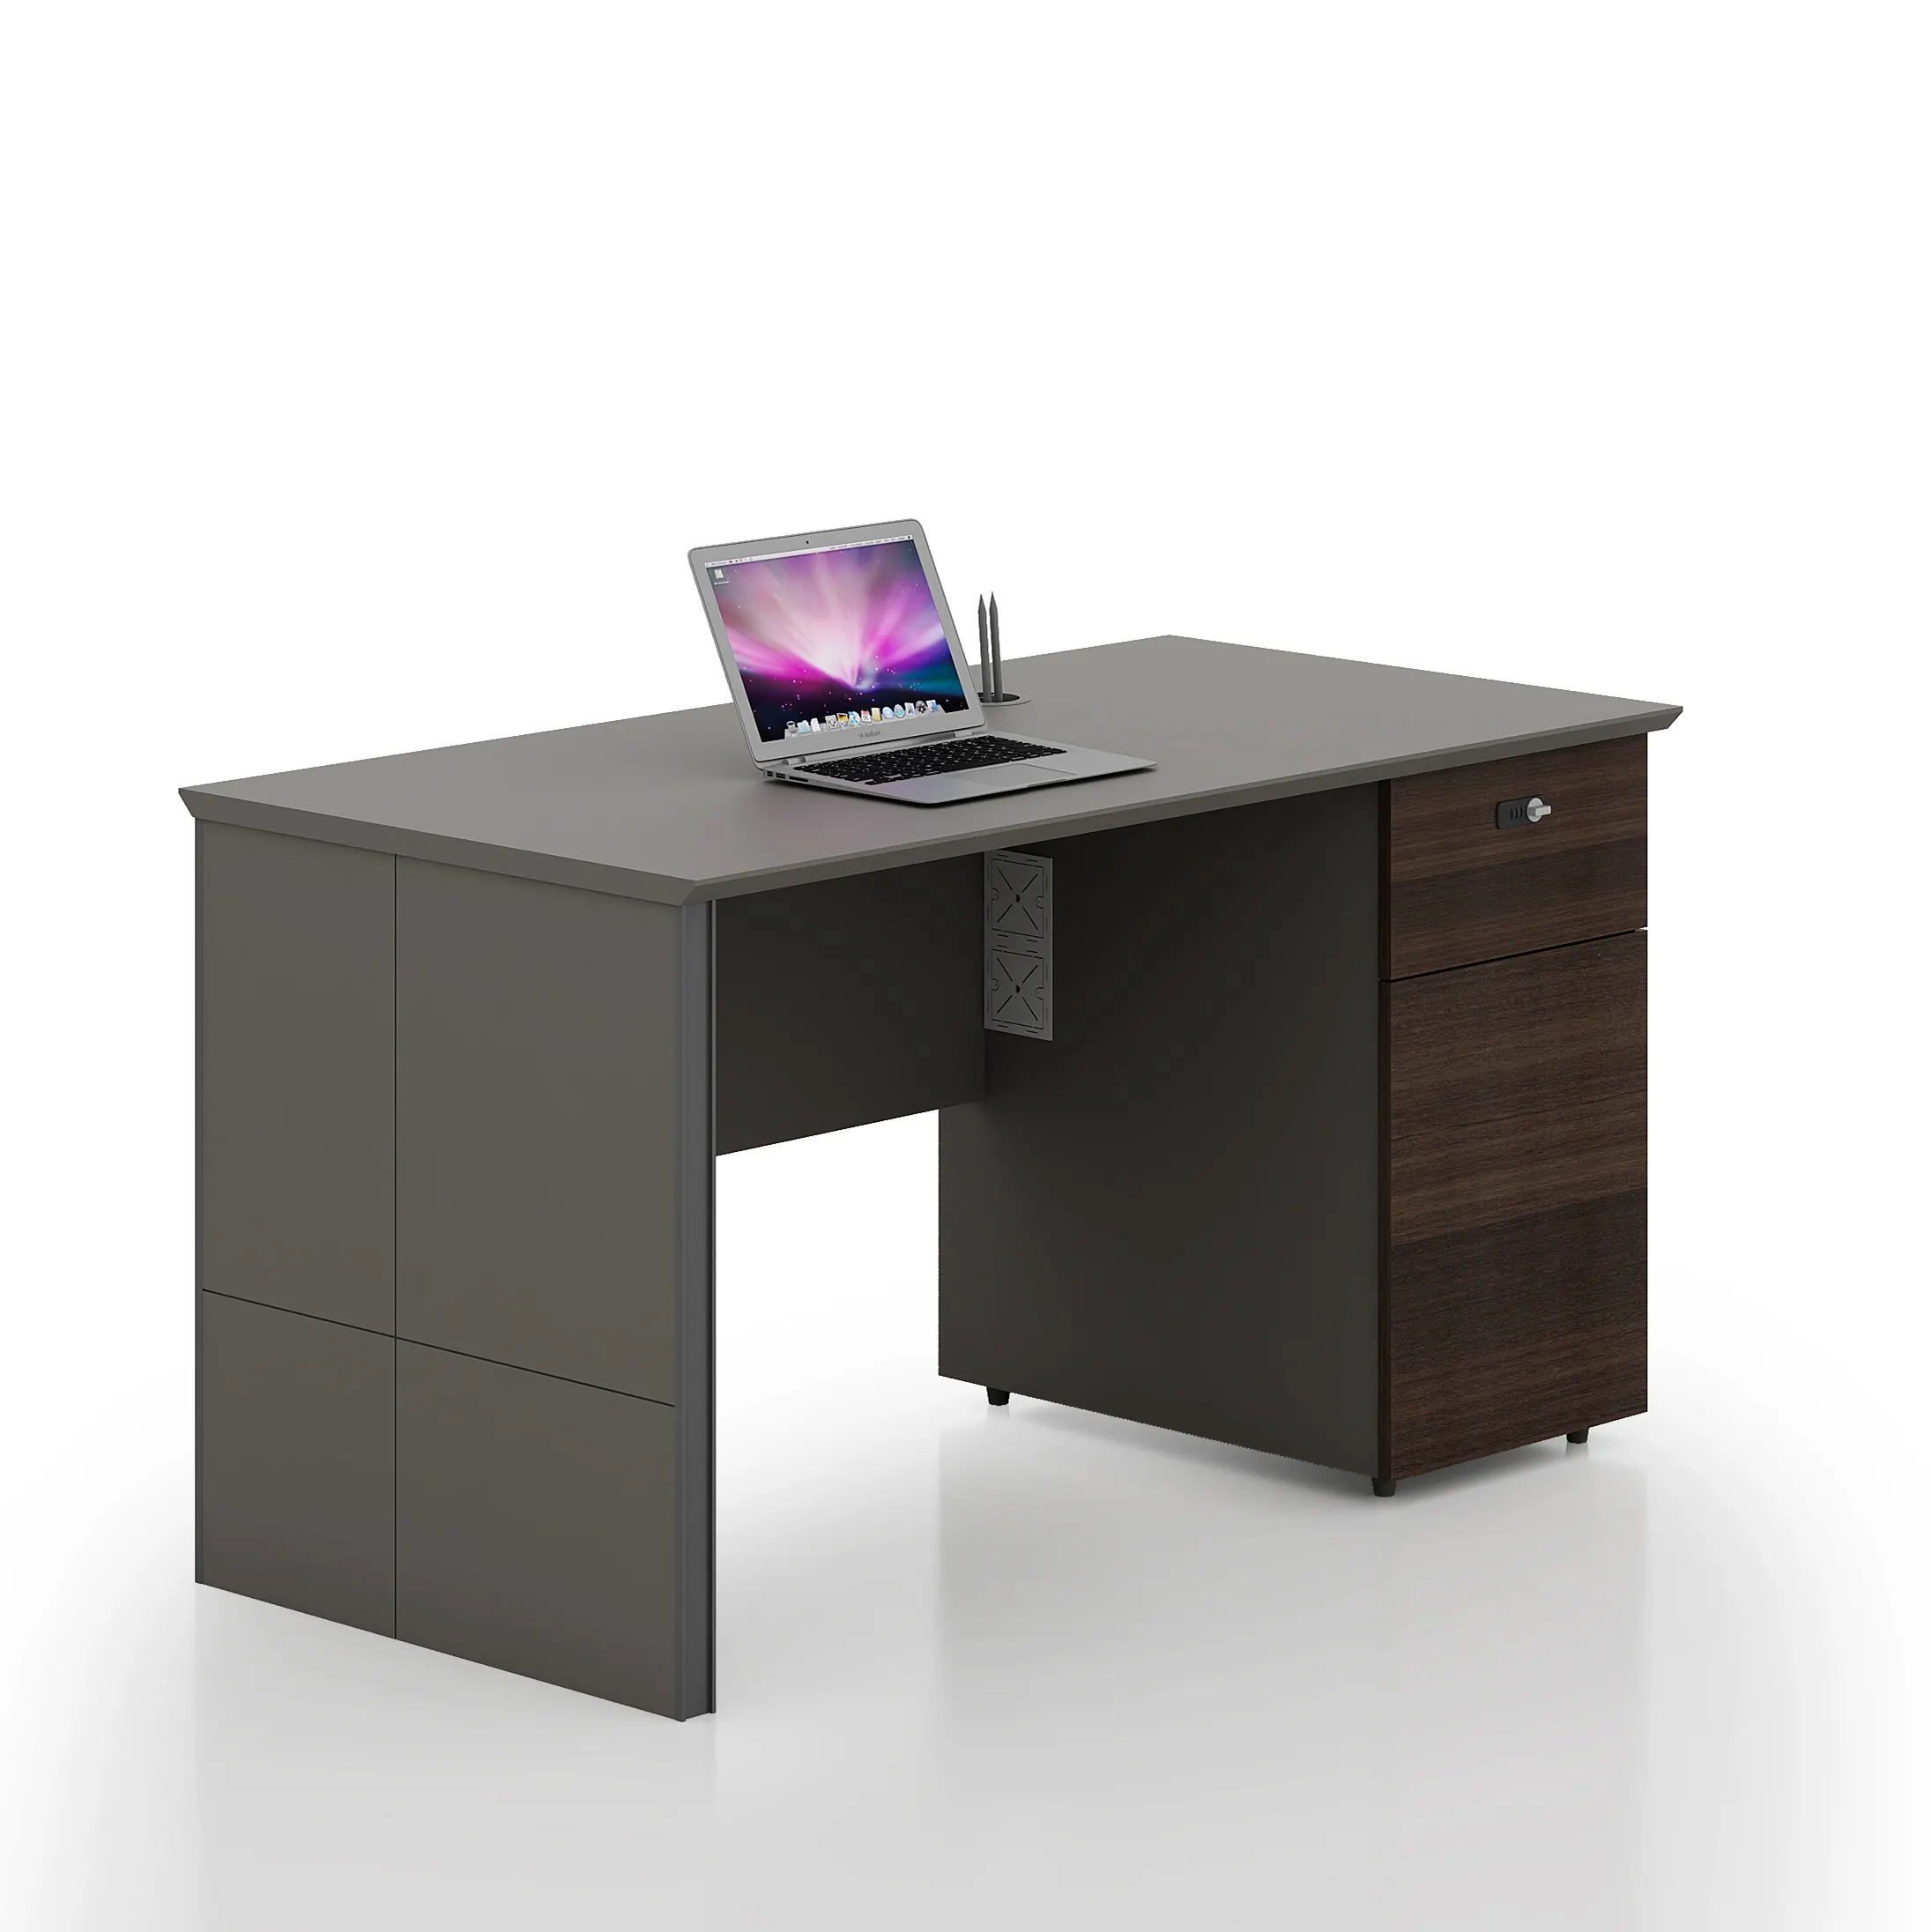 Professional Office Furniture Melamine MDF Executive Desk Customizable furniture commercial computer desk maten work desk